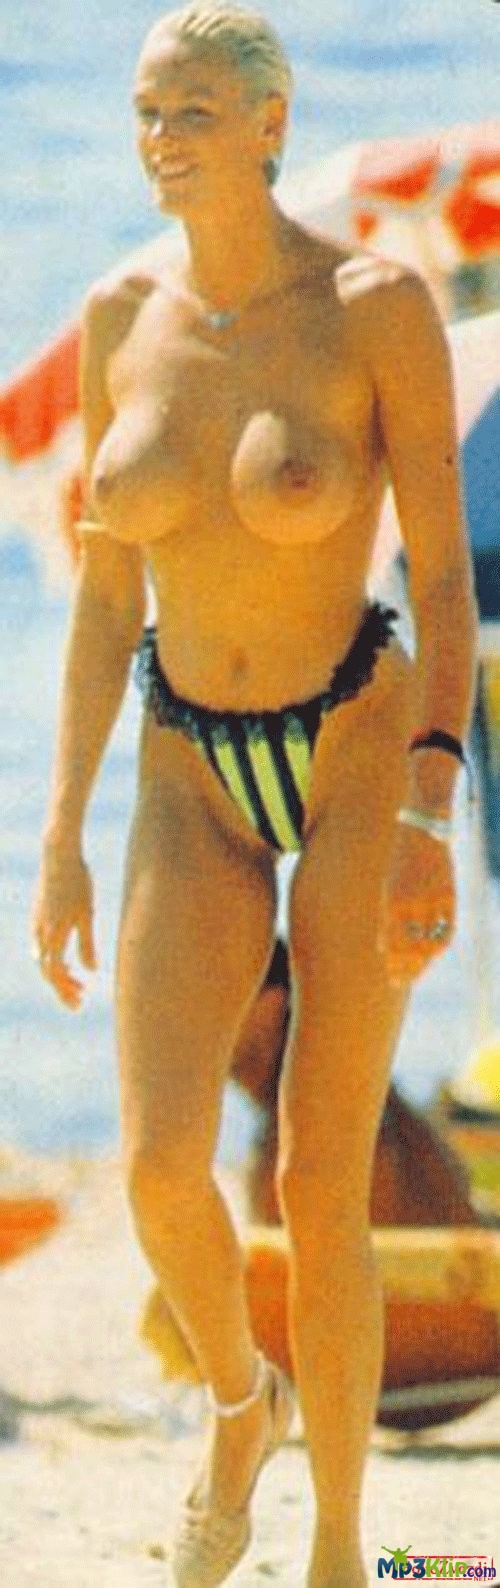 Nudes brigitte nielsen Brigitte Bardot